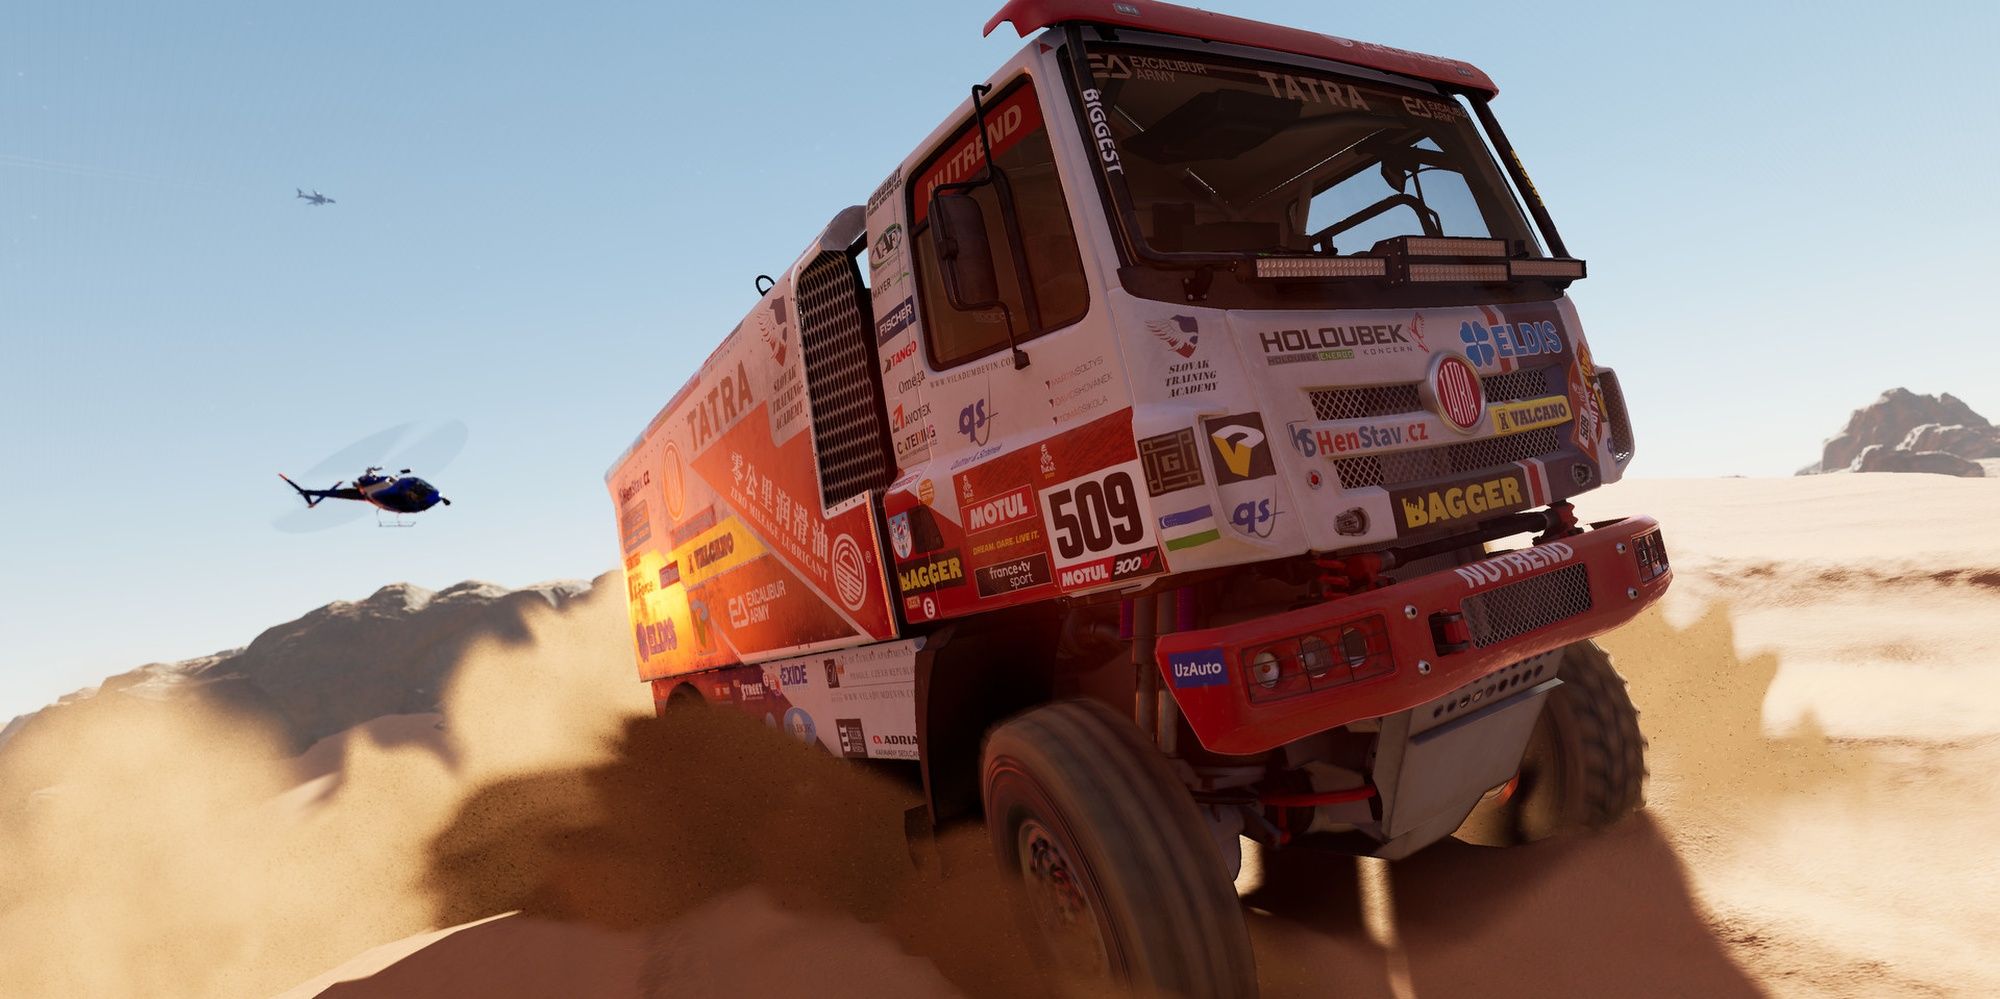 Dakar Desert Rally: A Sand Truck Crossing A Dune Whilst A Chase Copter Follows